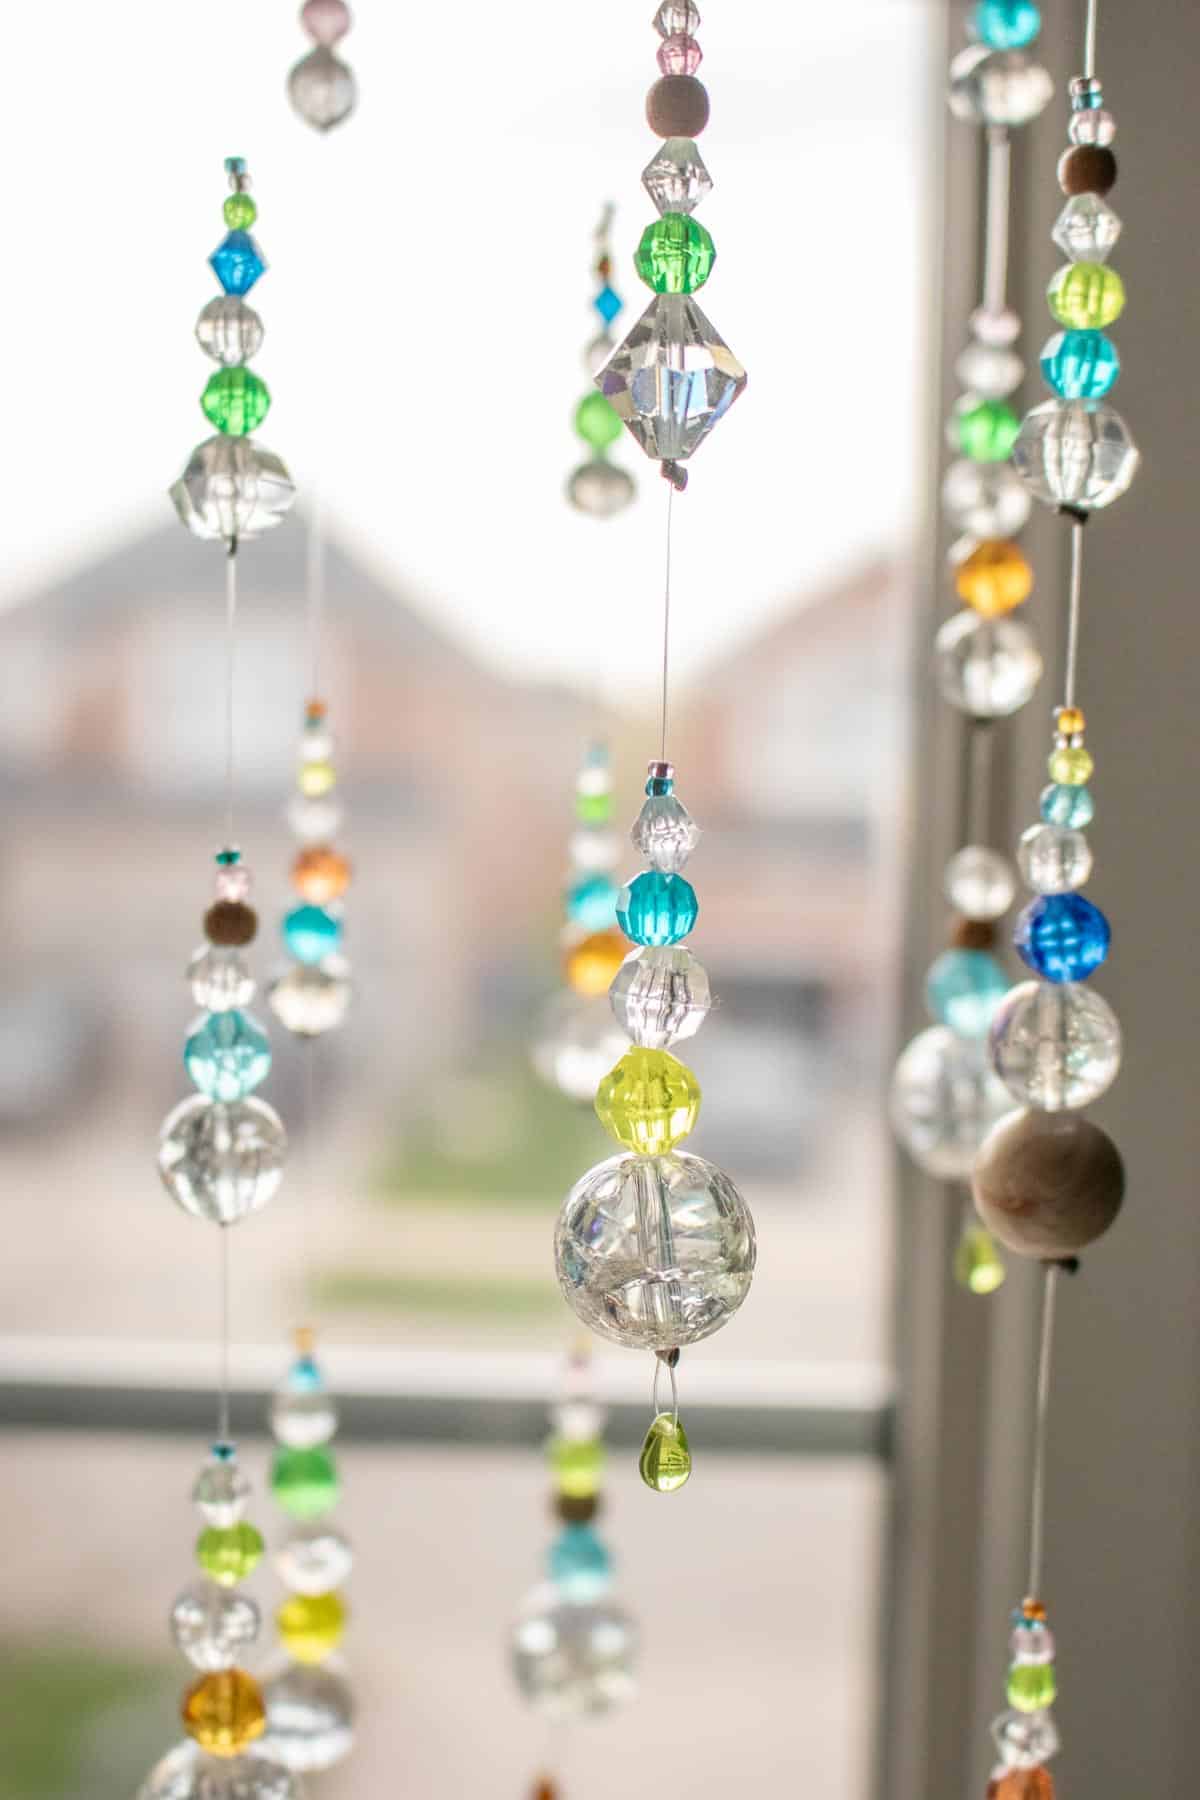 DIY Suncatchers with Glass Beads - Single Girl's DIY